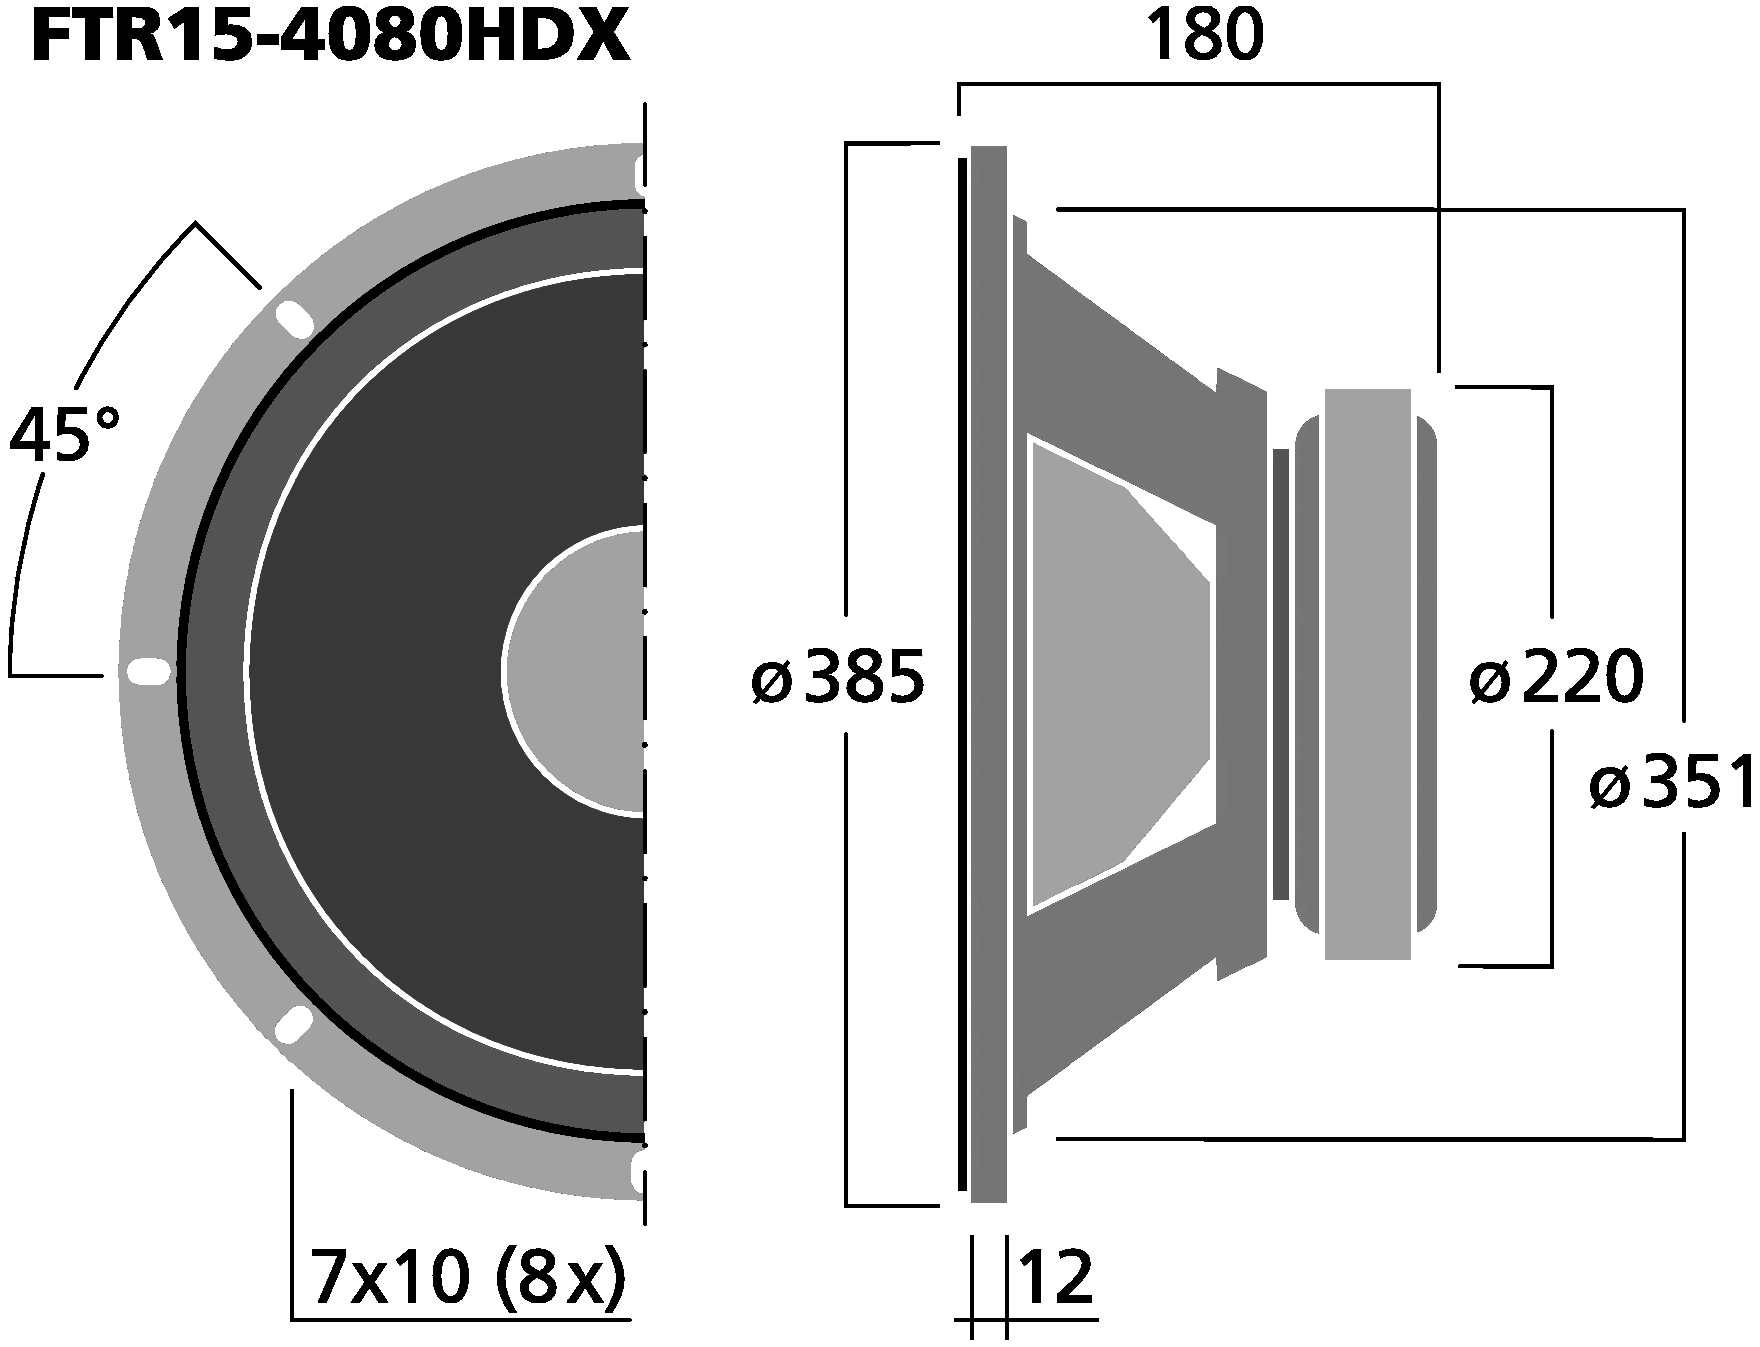 Celestion FTR15-4080HDX Dimensions